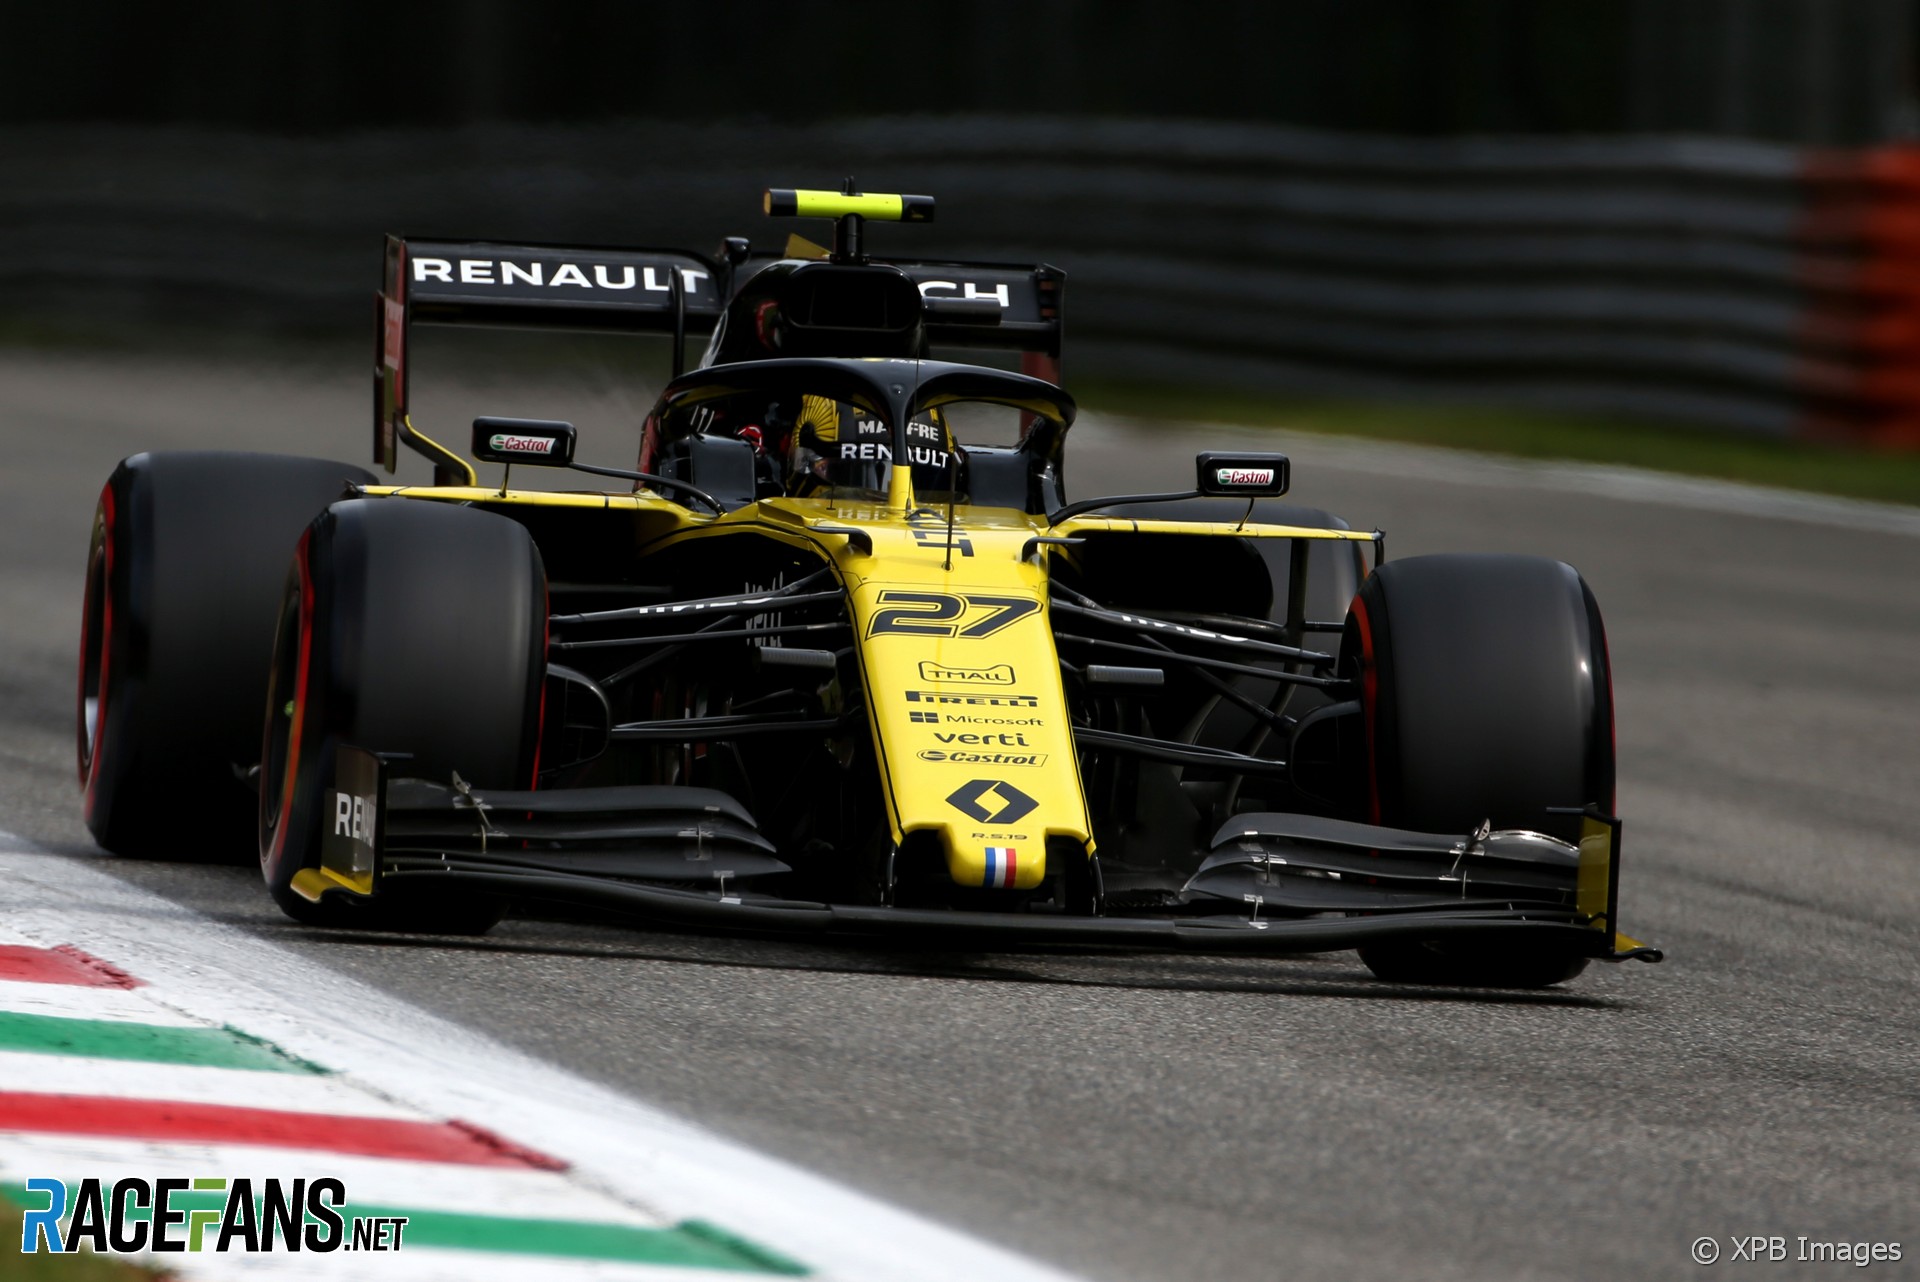 Nico Hulkenberg, Renault, Monza, 2019